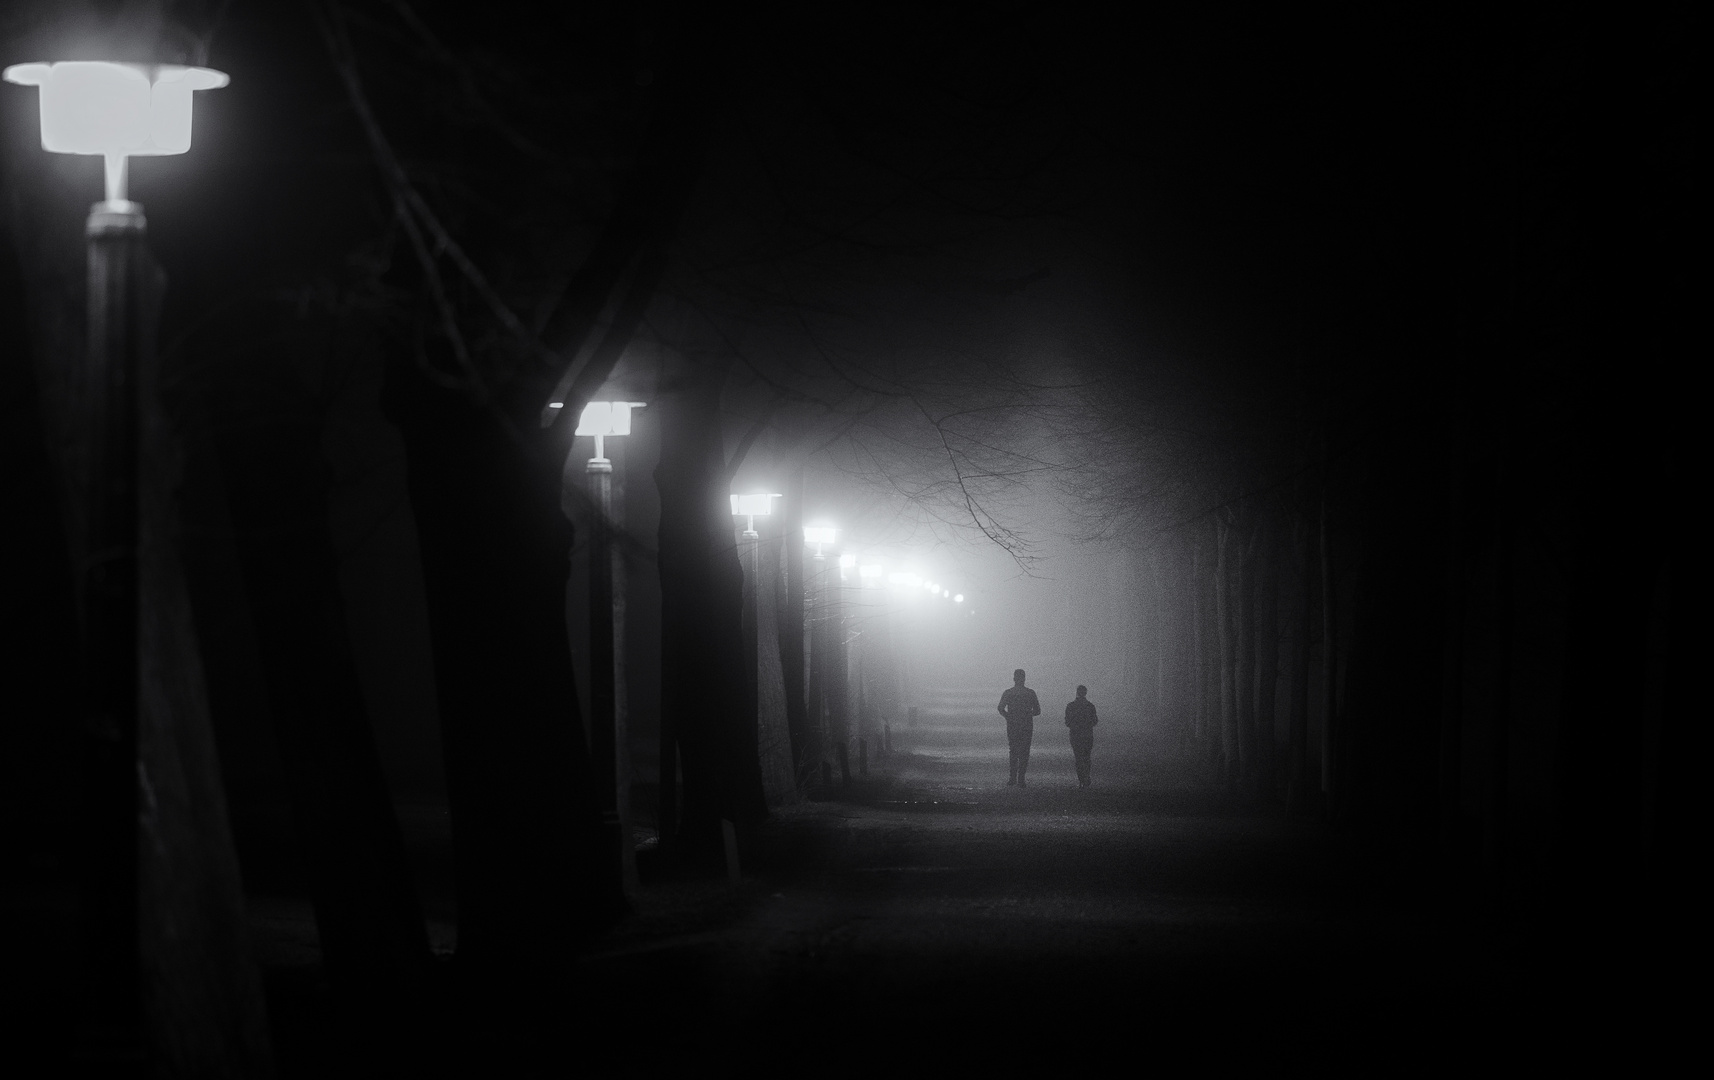 Running in the dark